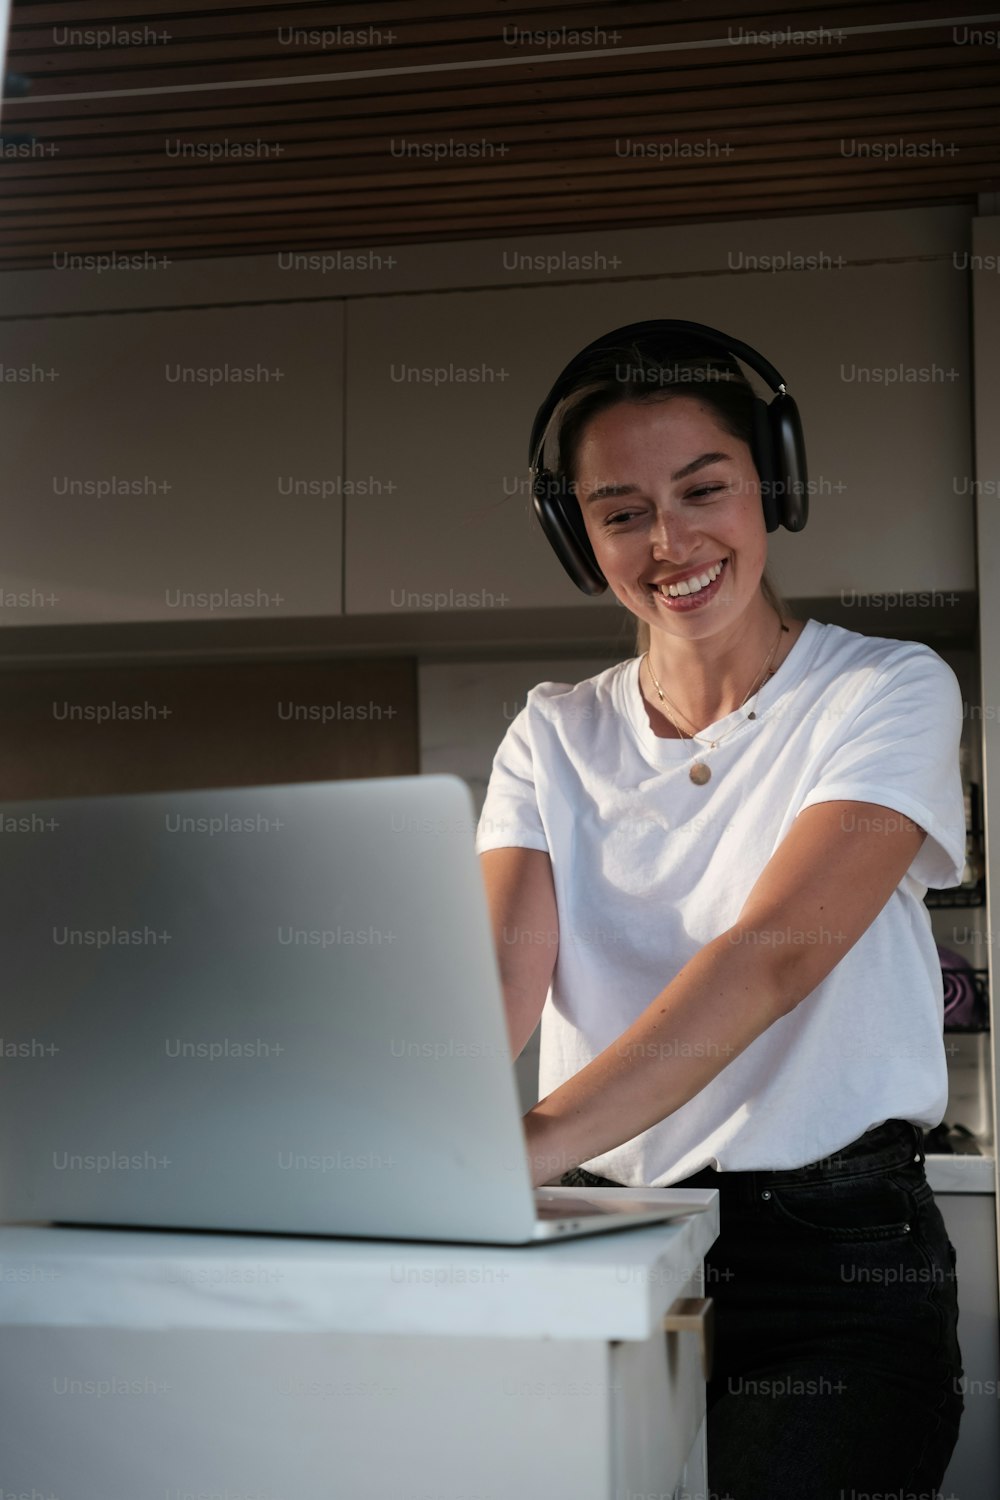 a woman wearing headphones using a laptop computer